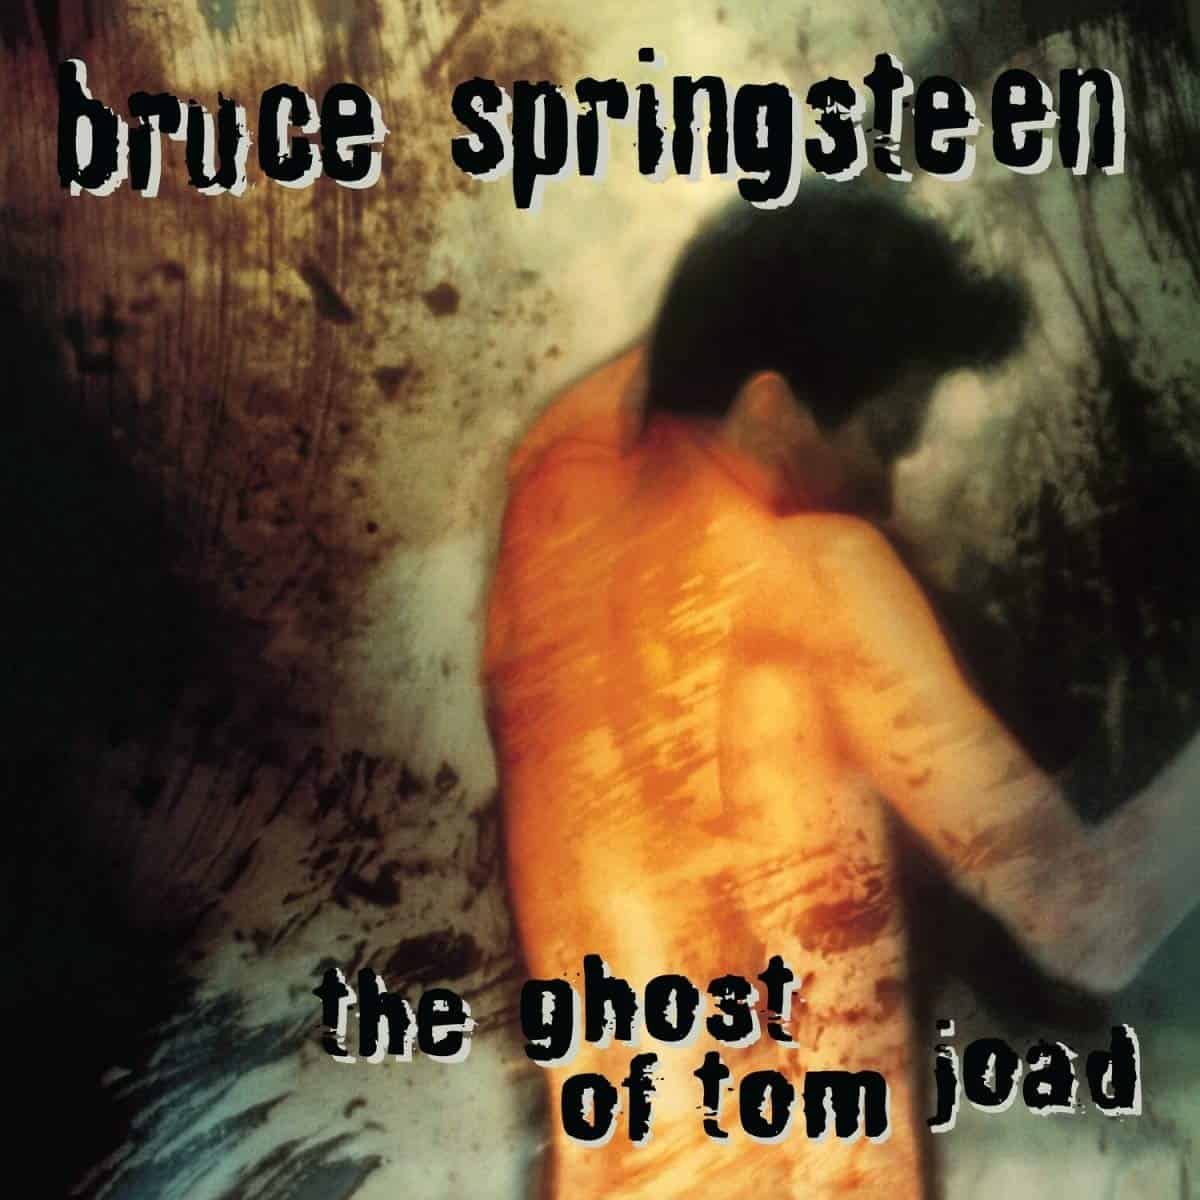 Bruce-Springsteen-Ghost-of-Tom-Joad-vinyl-record-album-front